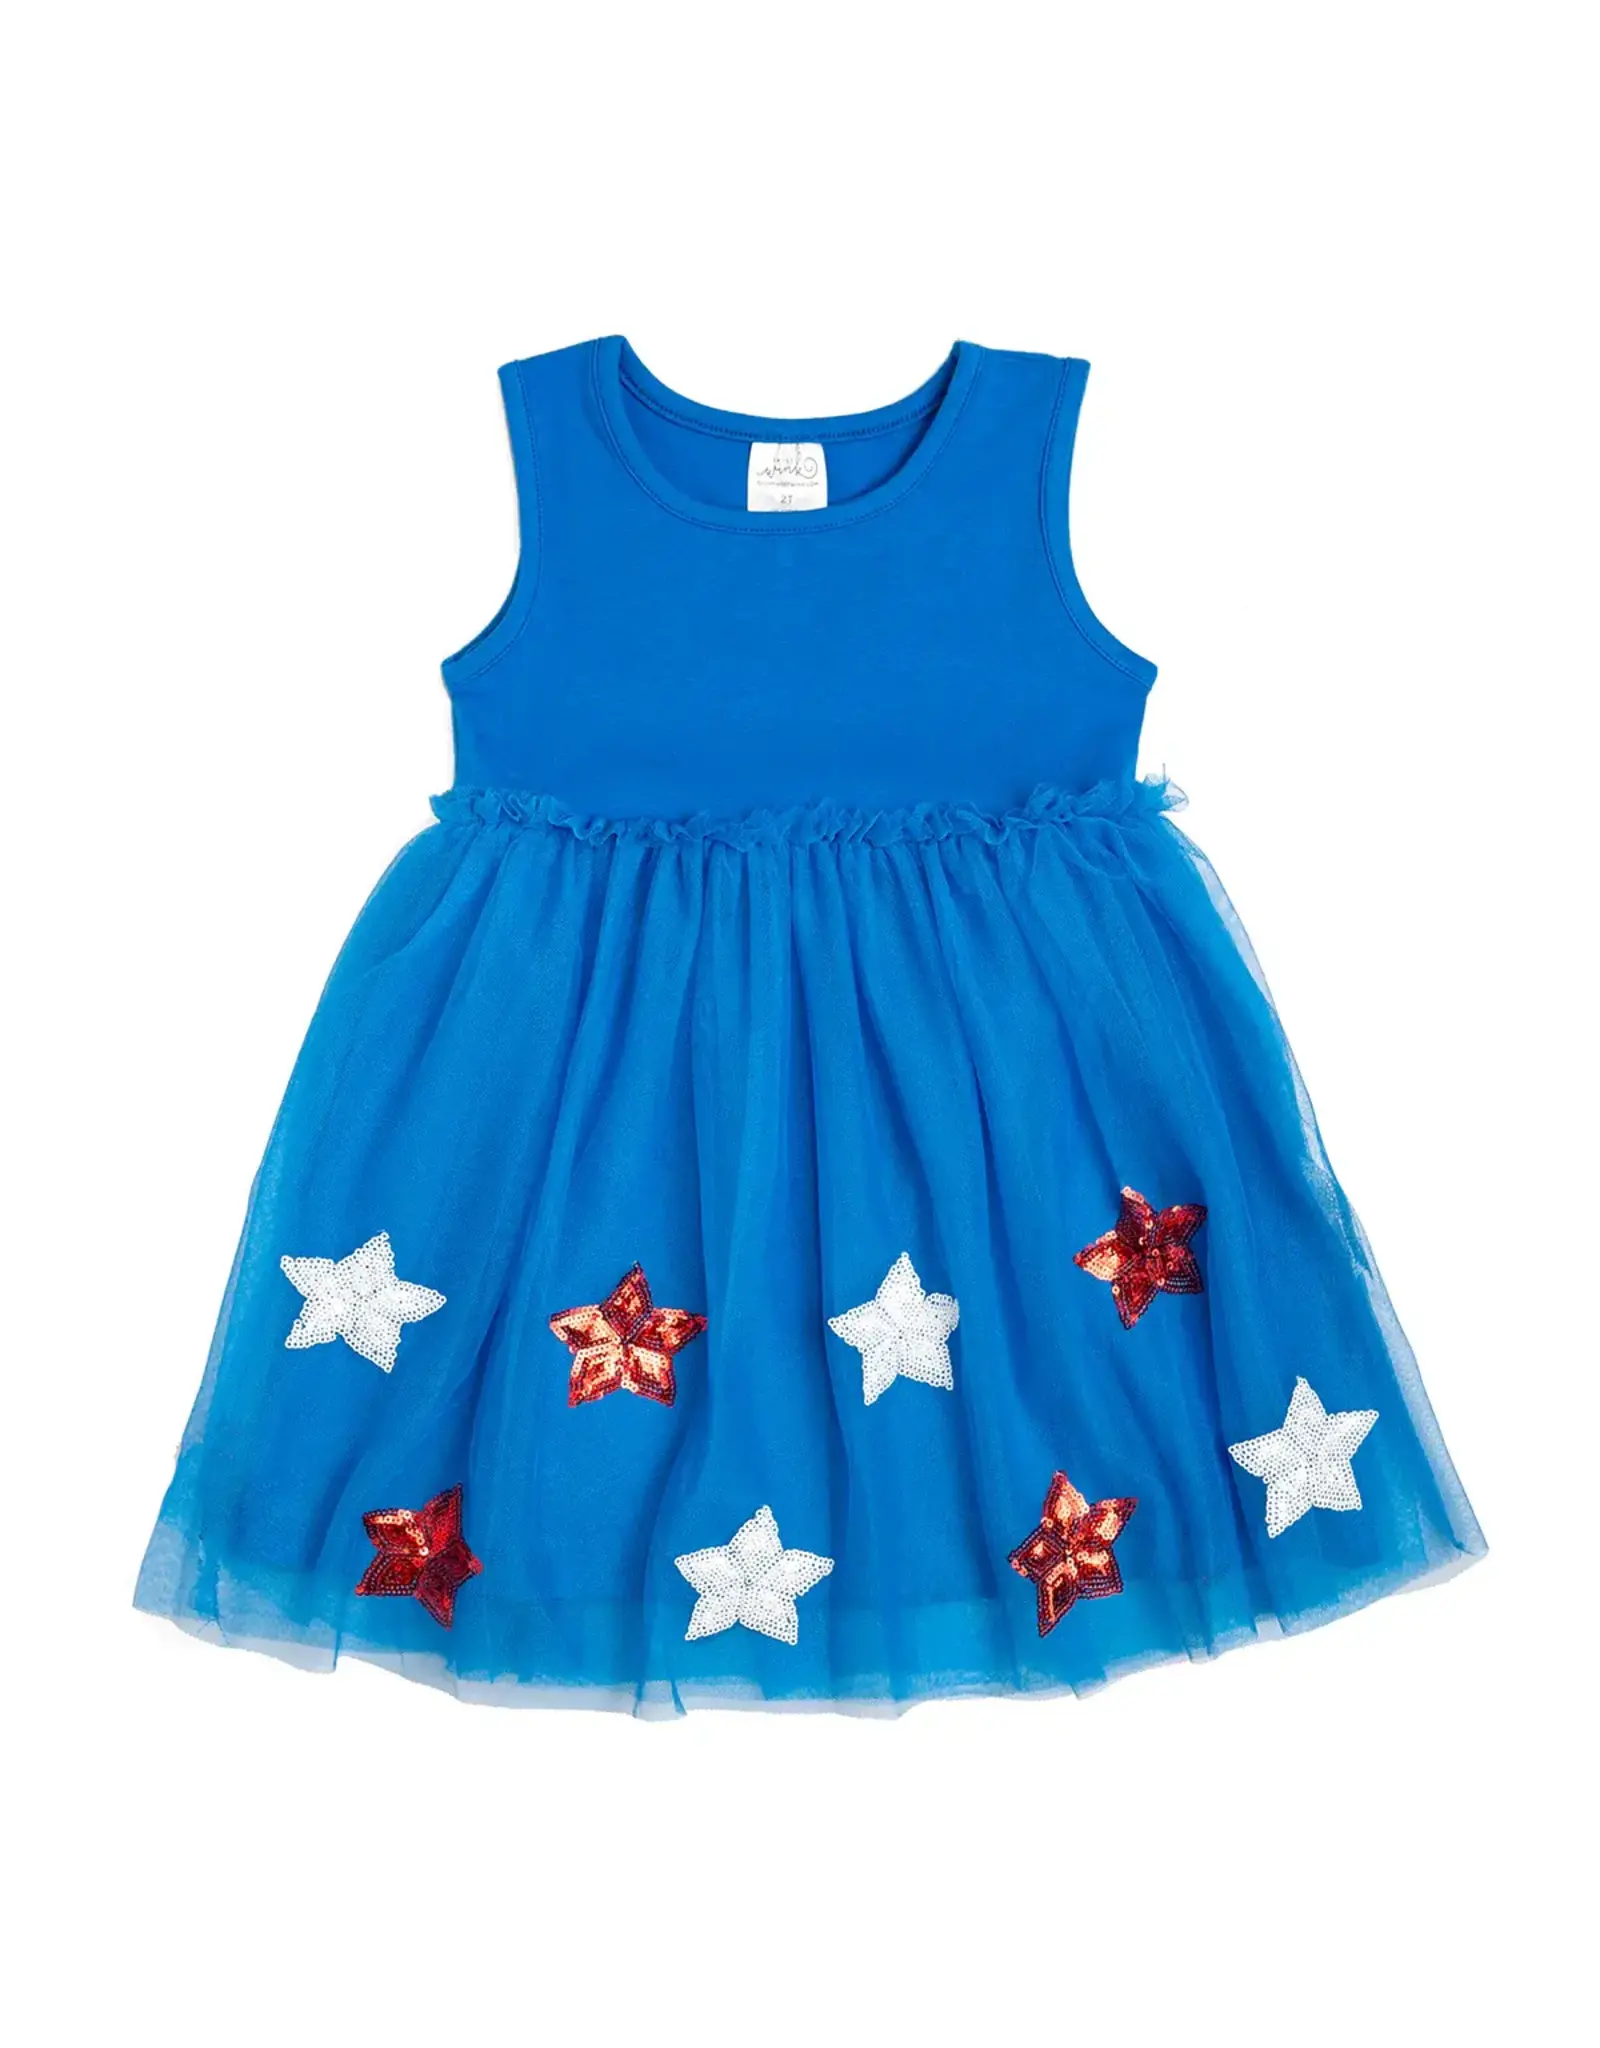 Sweet Wink- Patriotic Star Tutu Dress